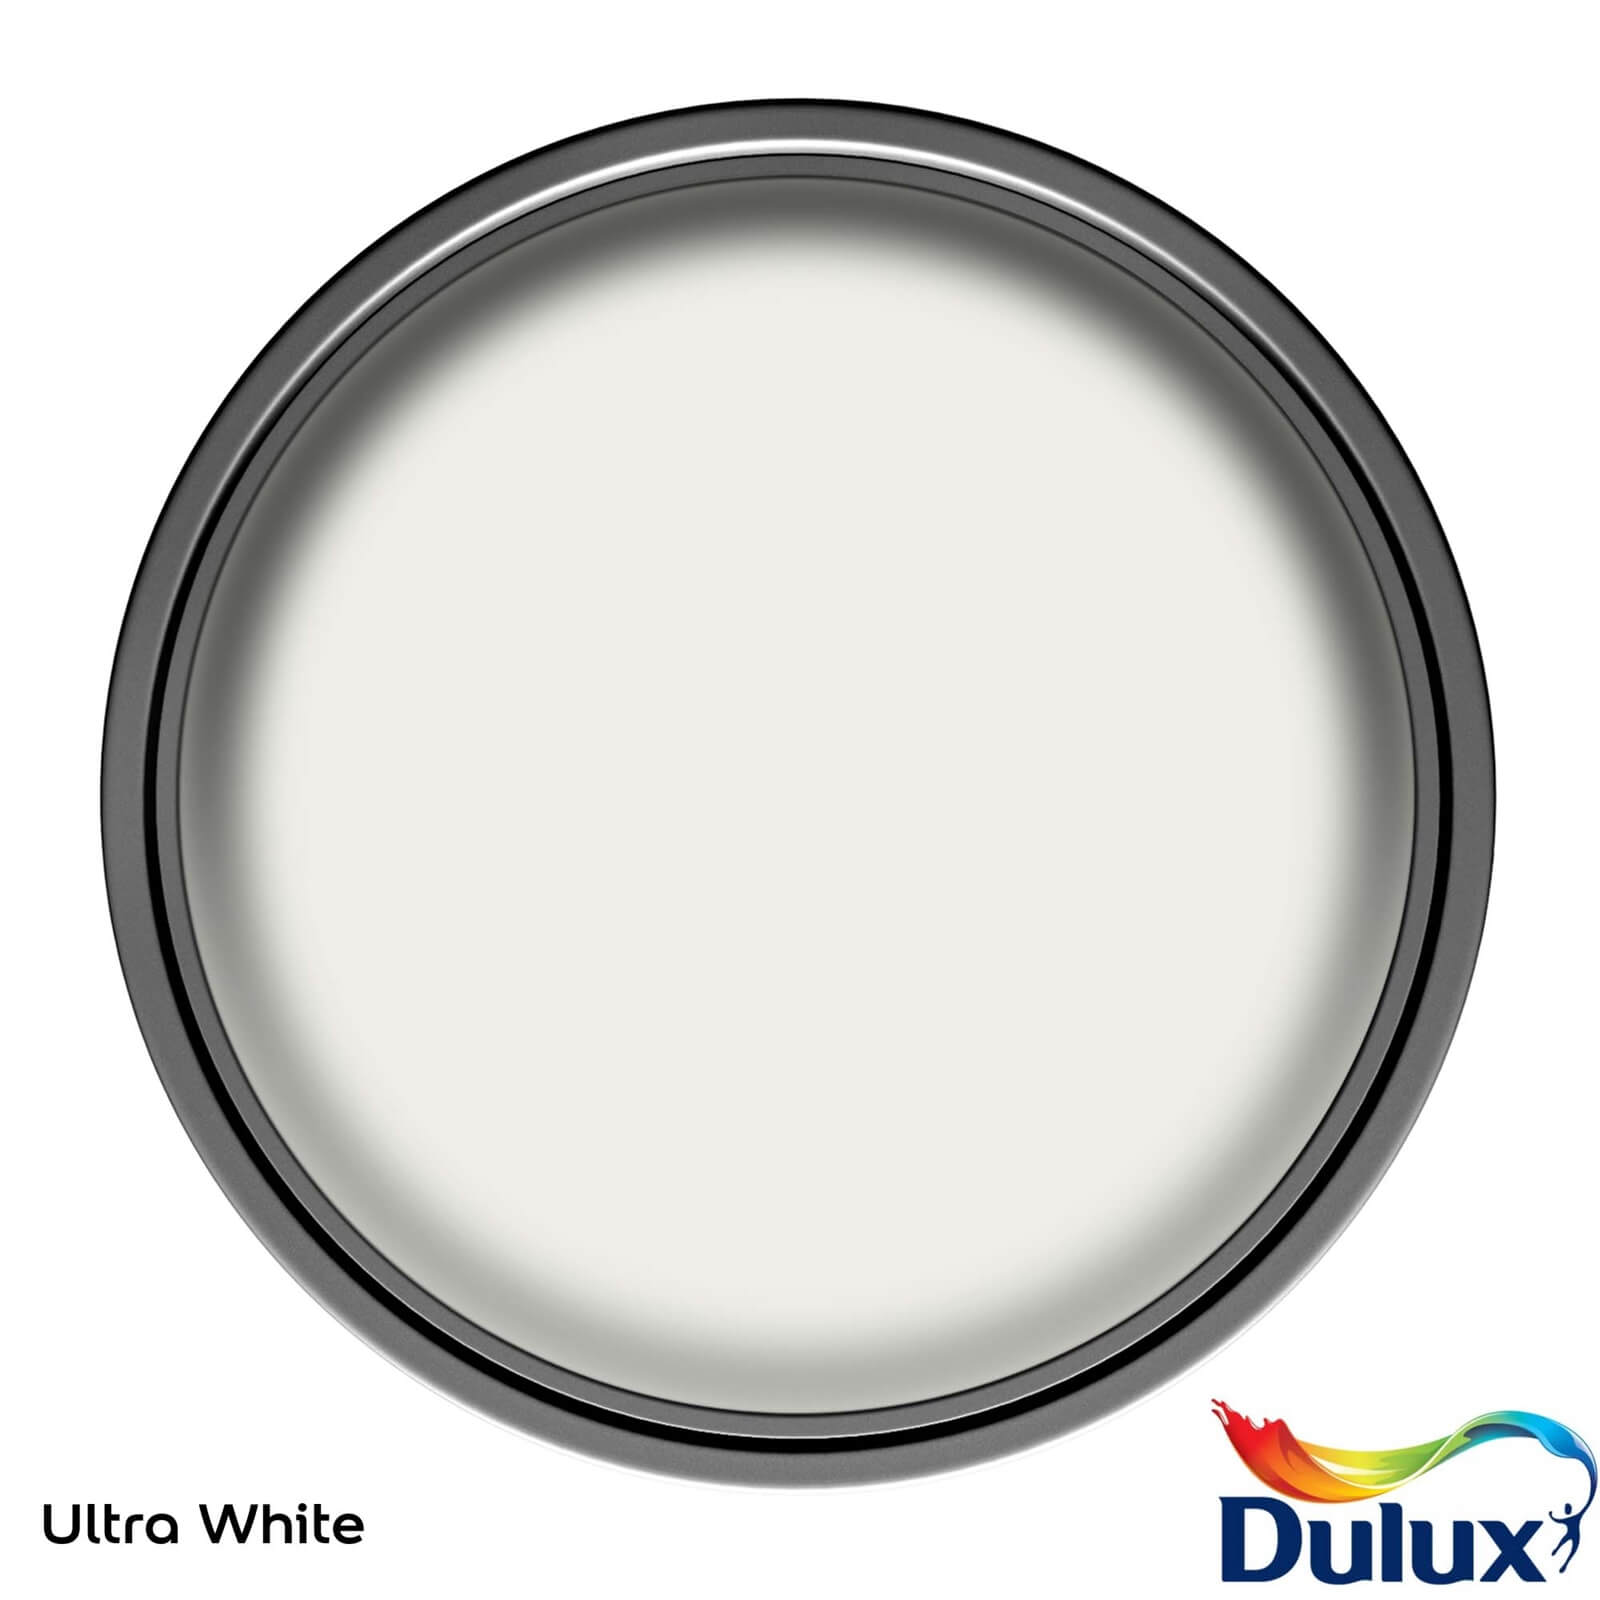 Dulux Ultra White - Matt Emulsion Paint - 5L